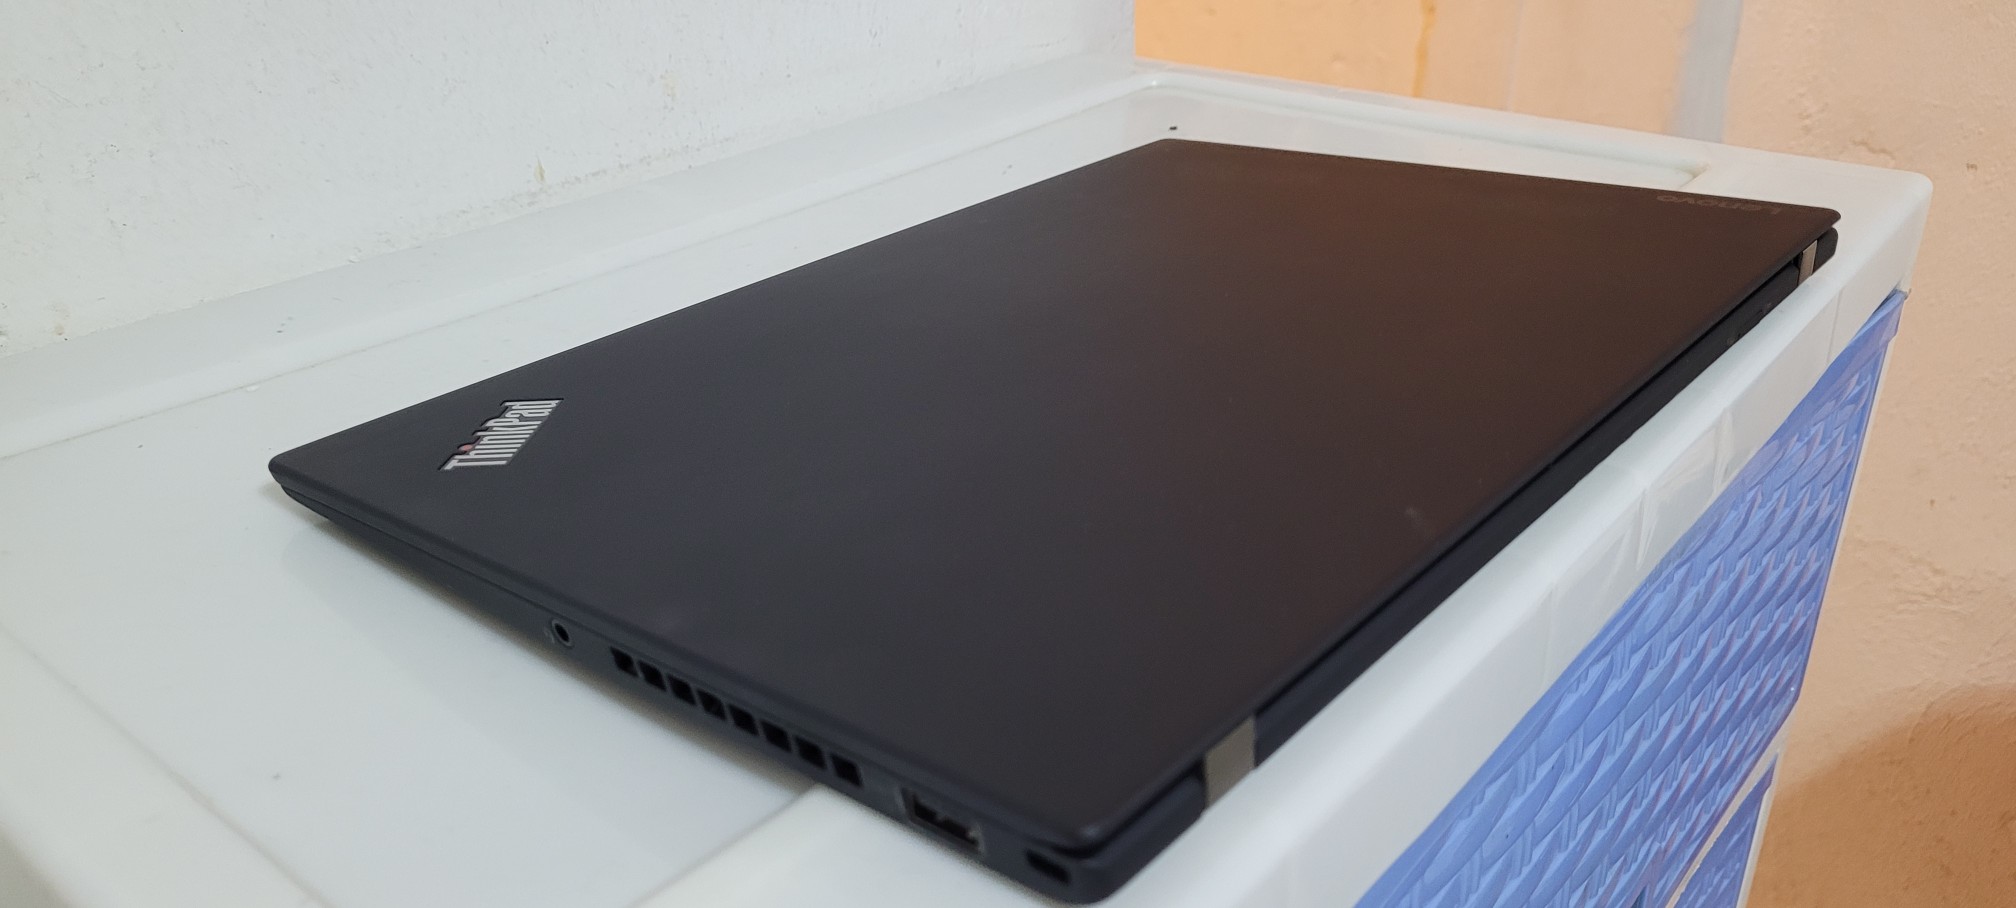 computadoras y laptops - Laptop lenovo T460 14 Pulg Core i7 Ram 12gb DDR4 Disco SSD 256GB Video 6GB 2